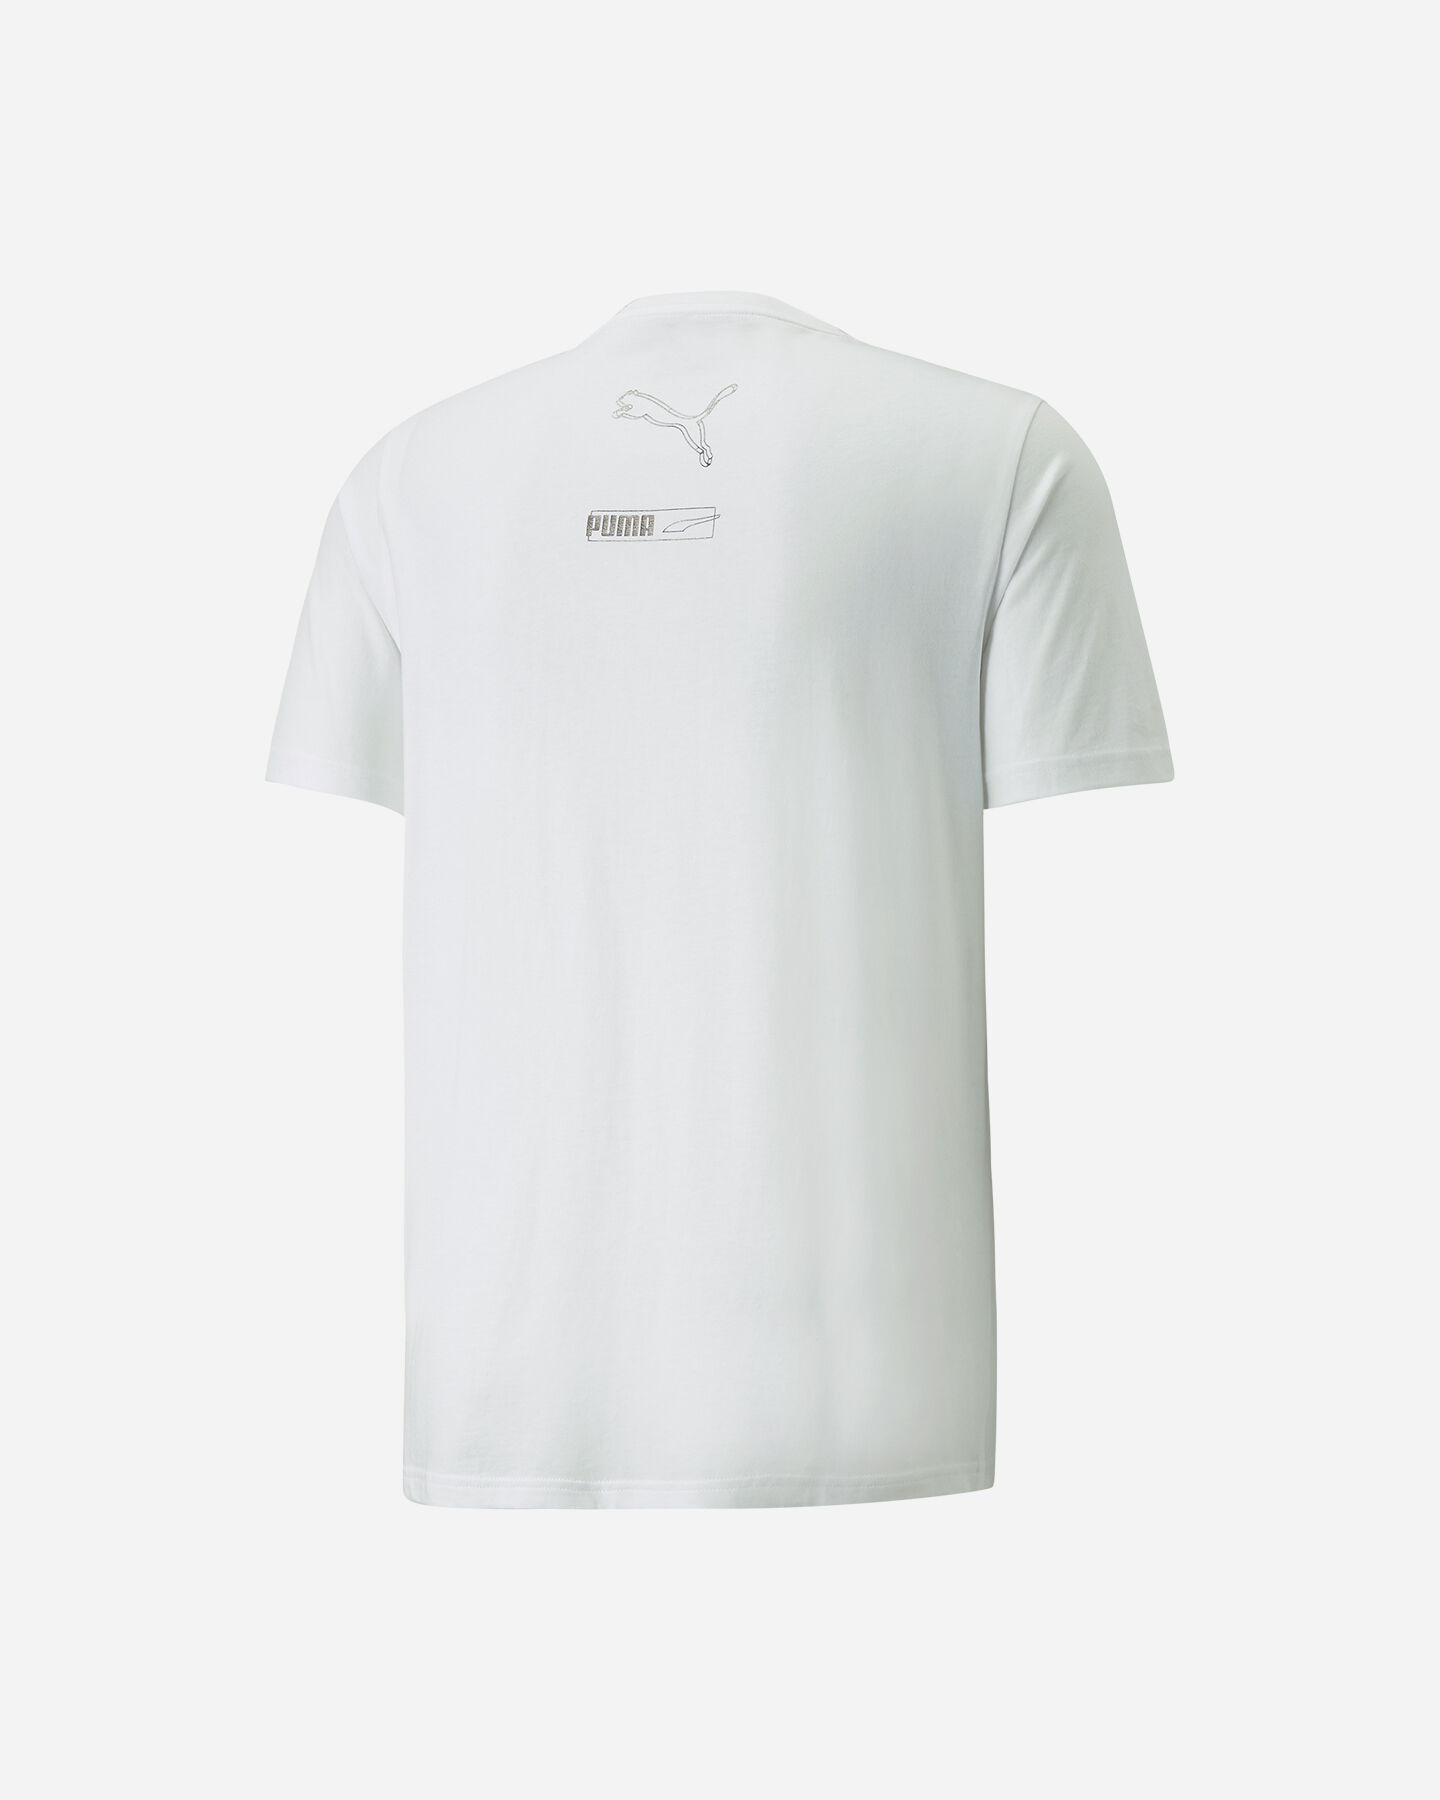  T-Shirt PUMA LOGO FOIL M S5400291|02|S scatto 1